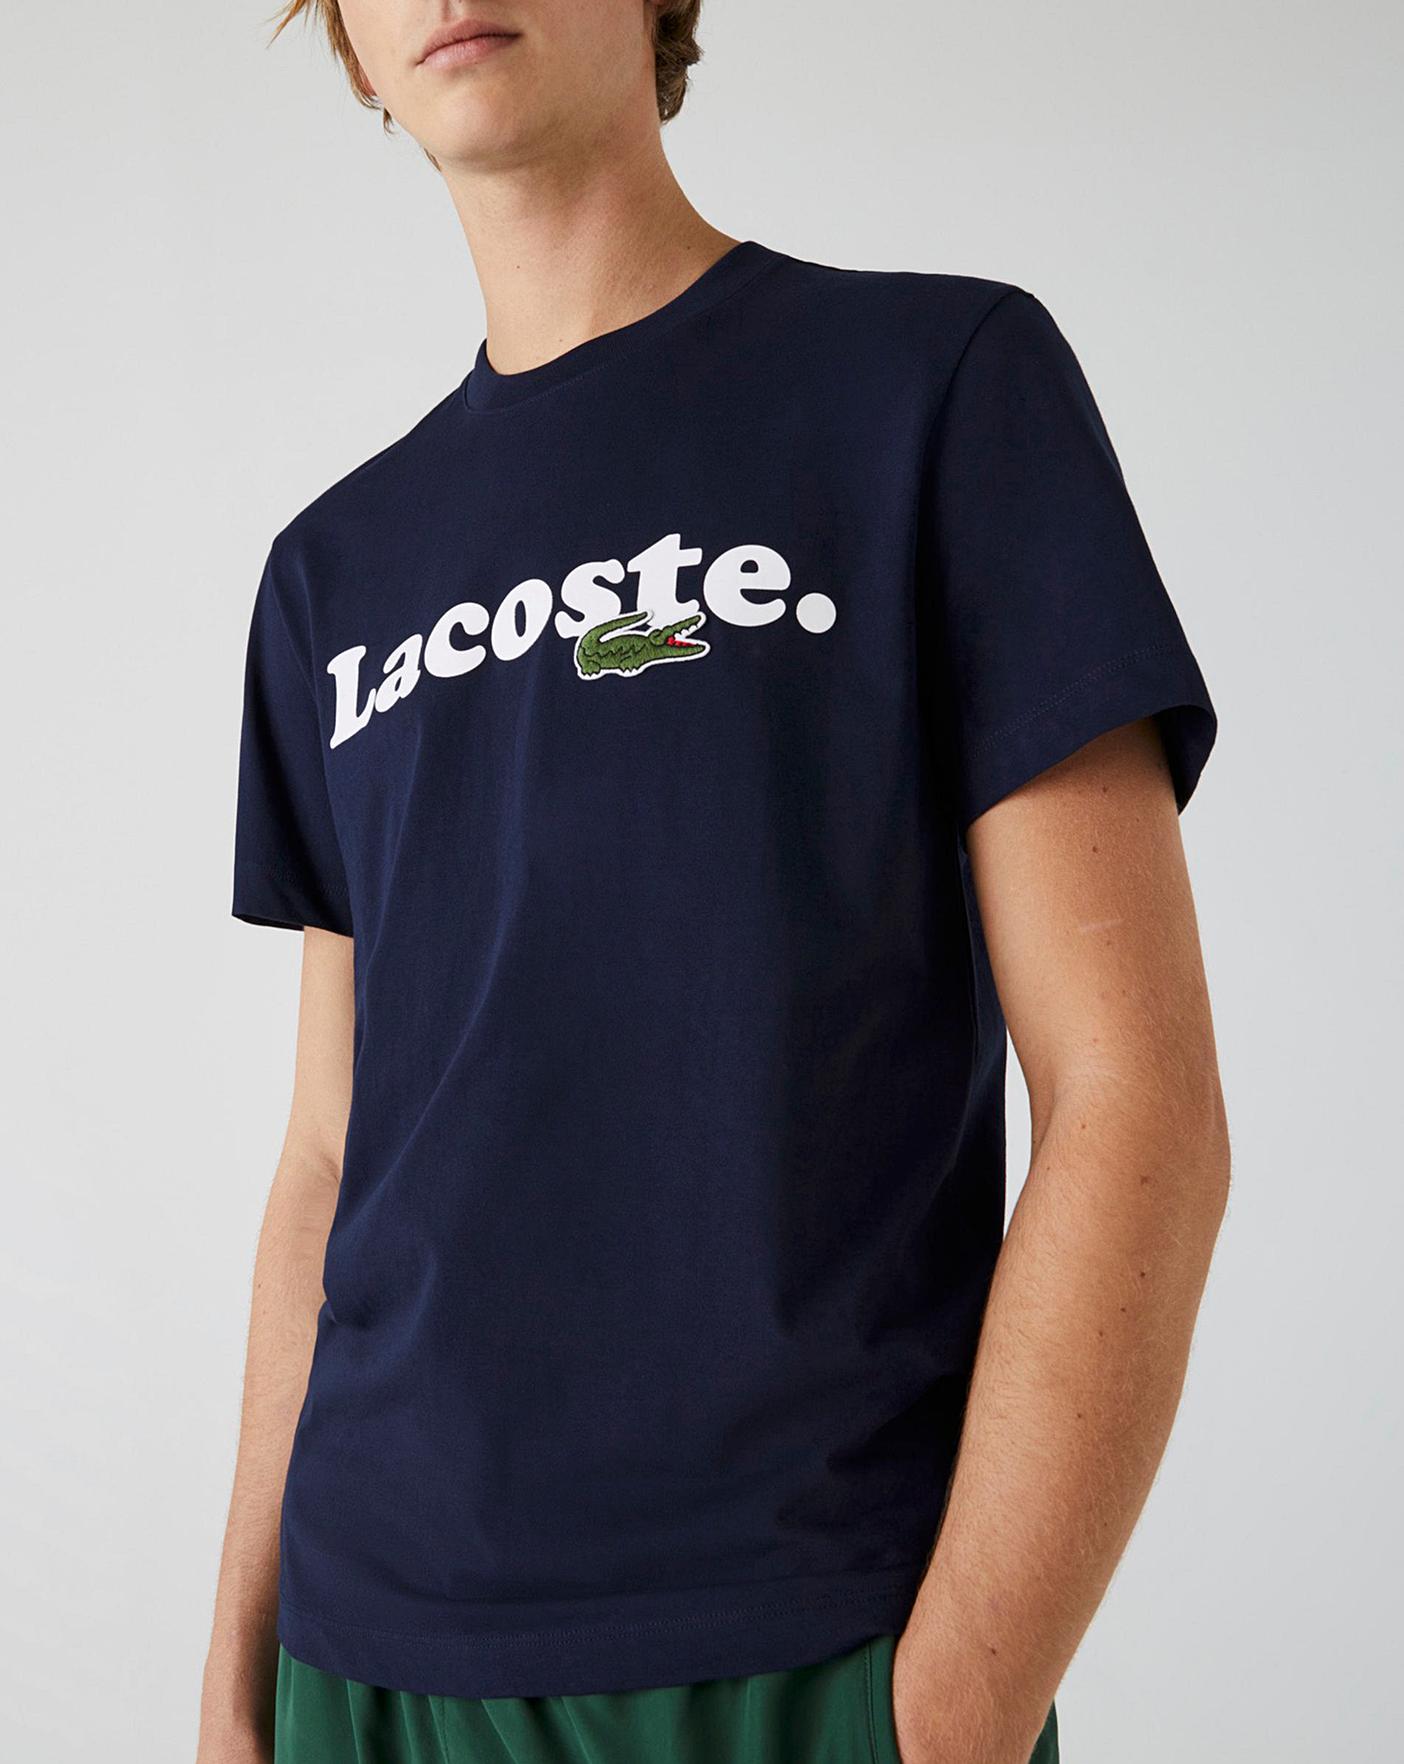 Lacoste Word Print T-Shirt | Jacamo